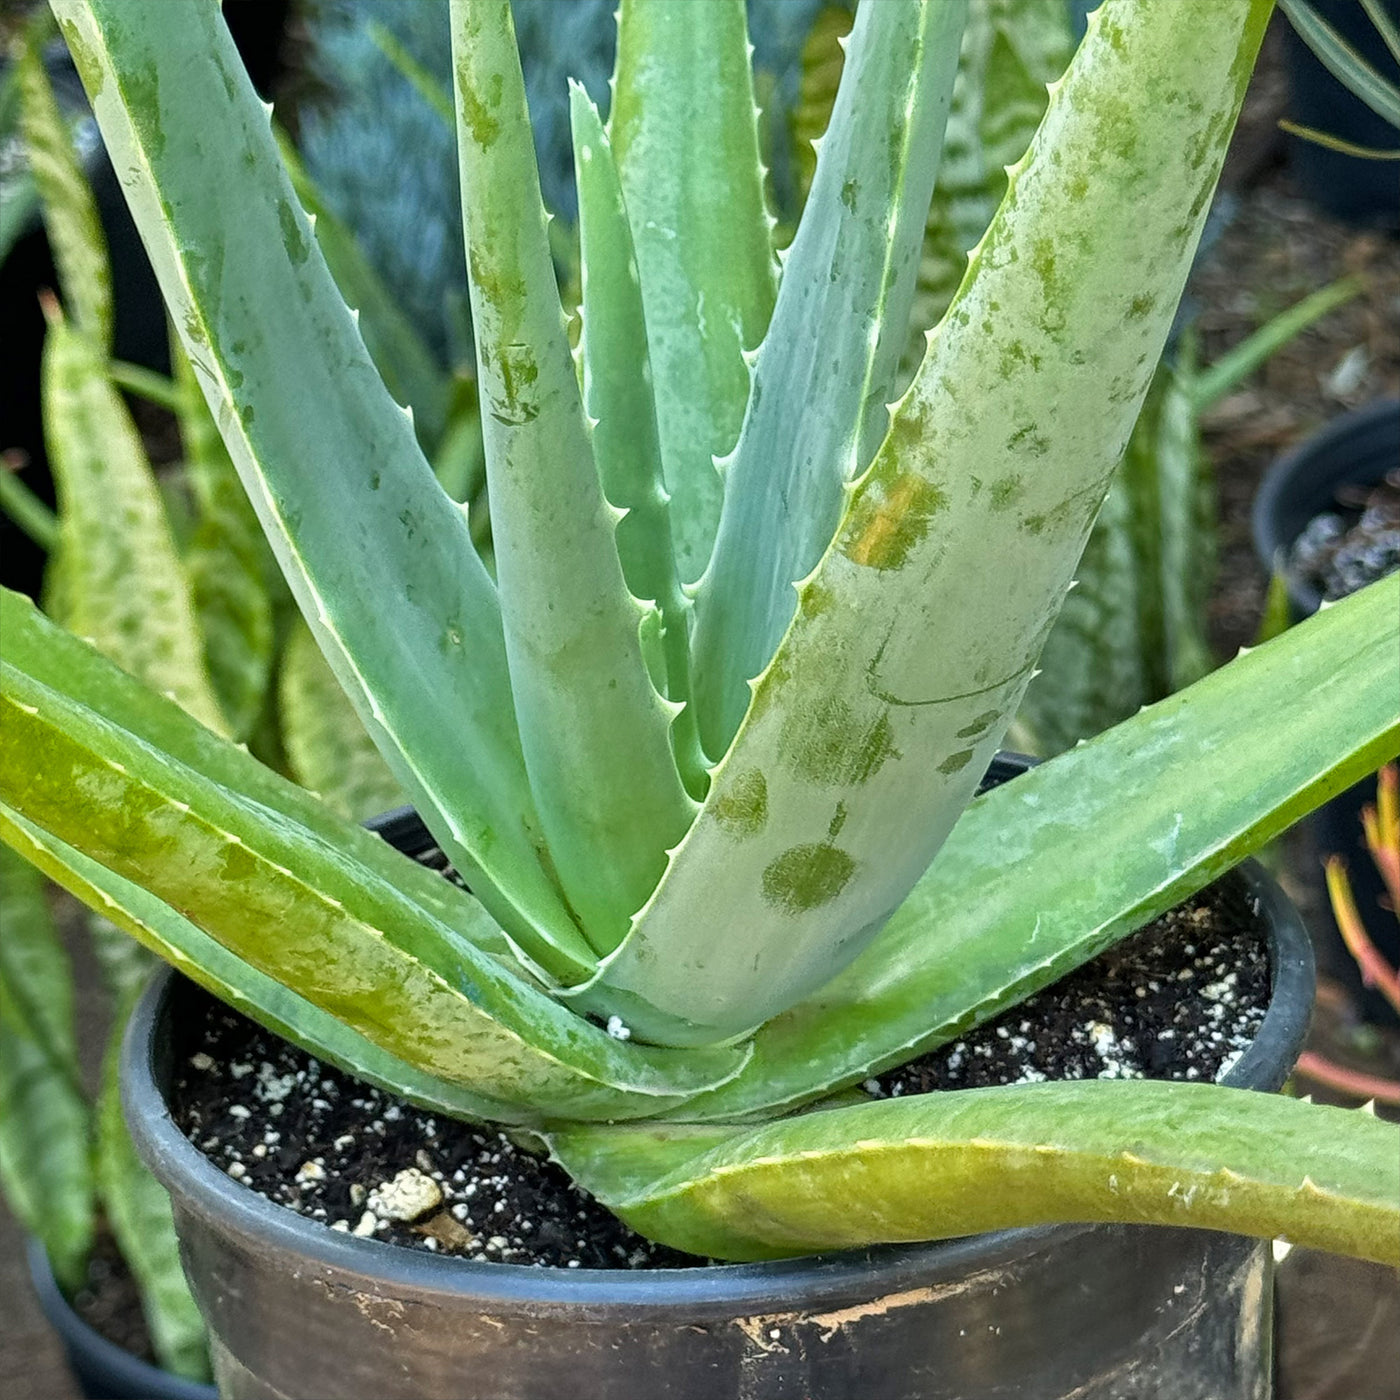 Aloe Vera - Aloe barbadensis 'miller'